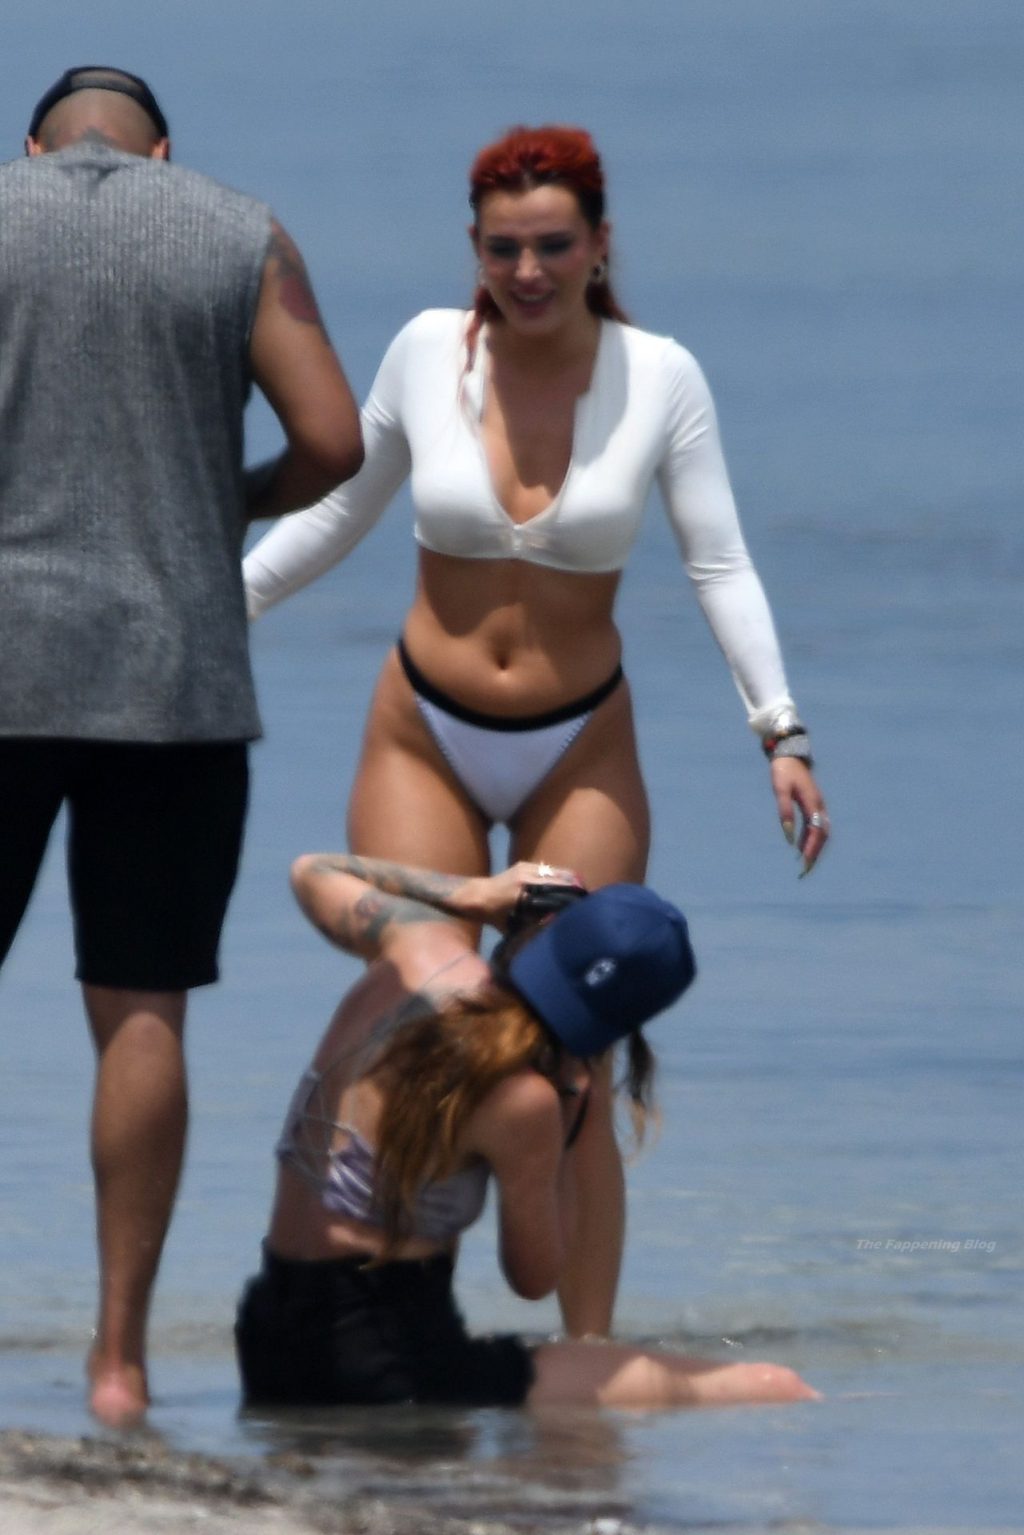 Bella Thorne Poses in a White Bikini During a Photoshoot on the Beach in Miami (53 Photos)